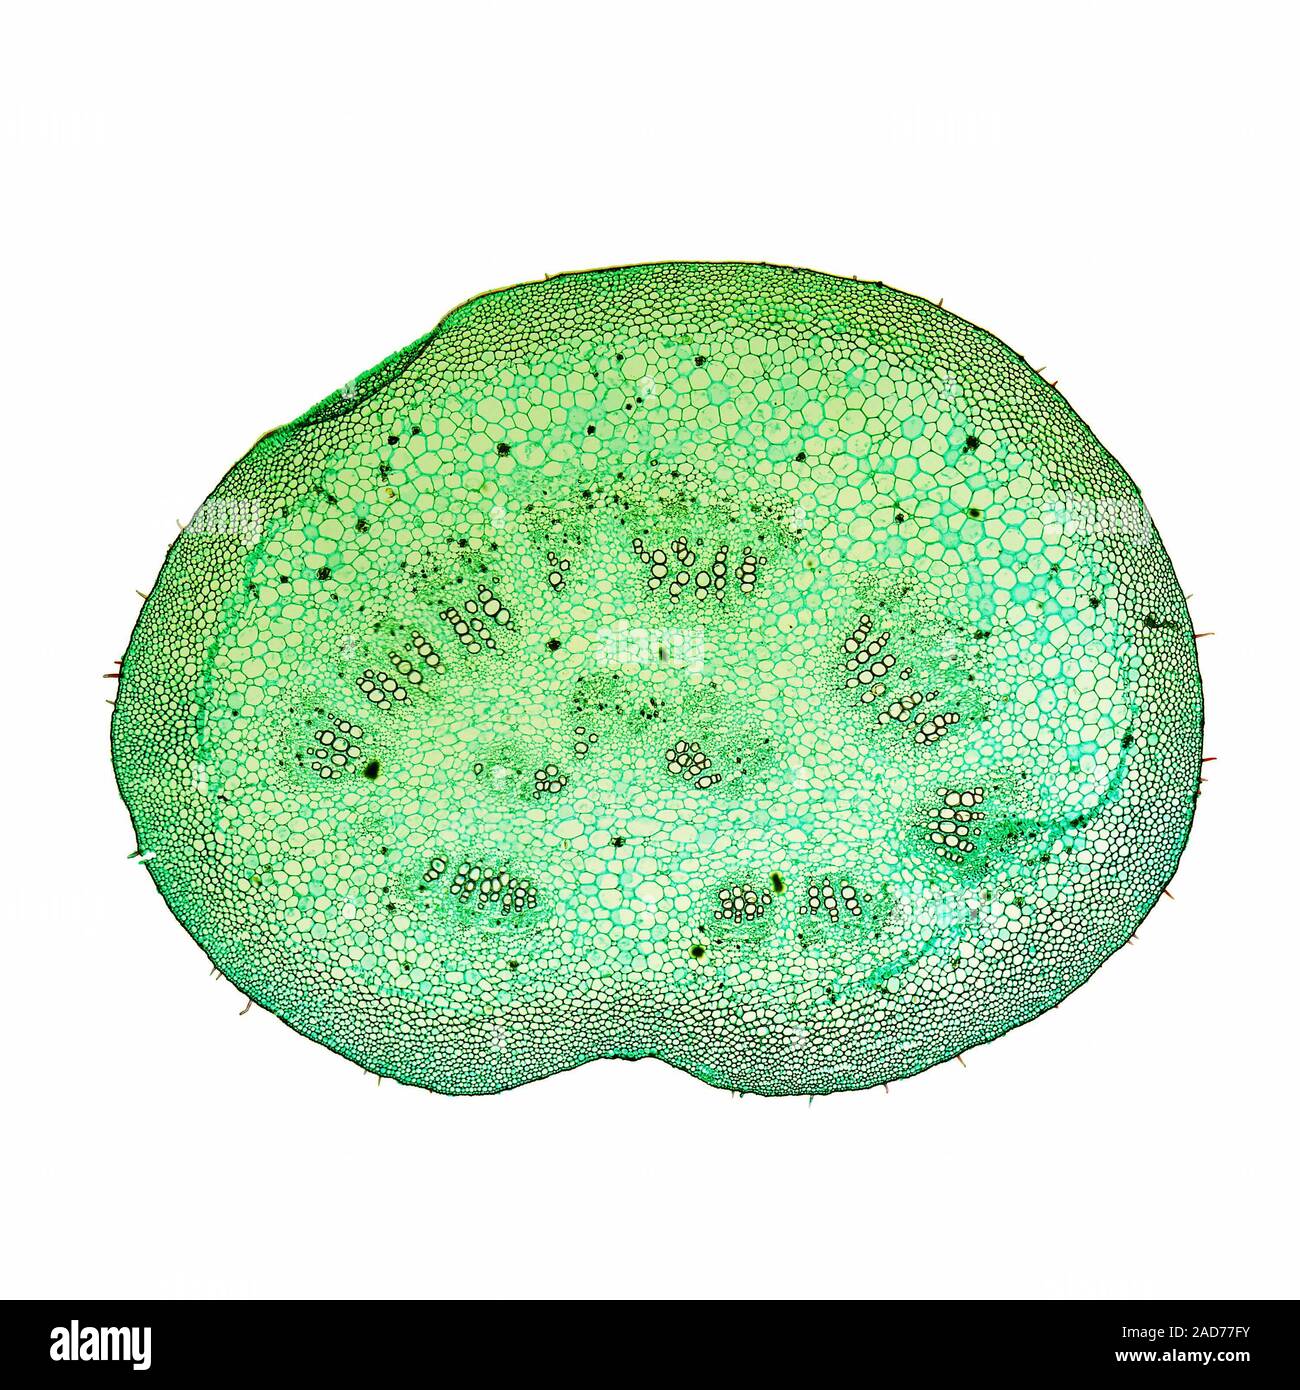 Mulberry micrograph image Stock Photo